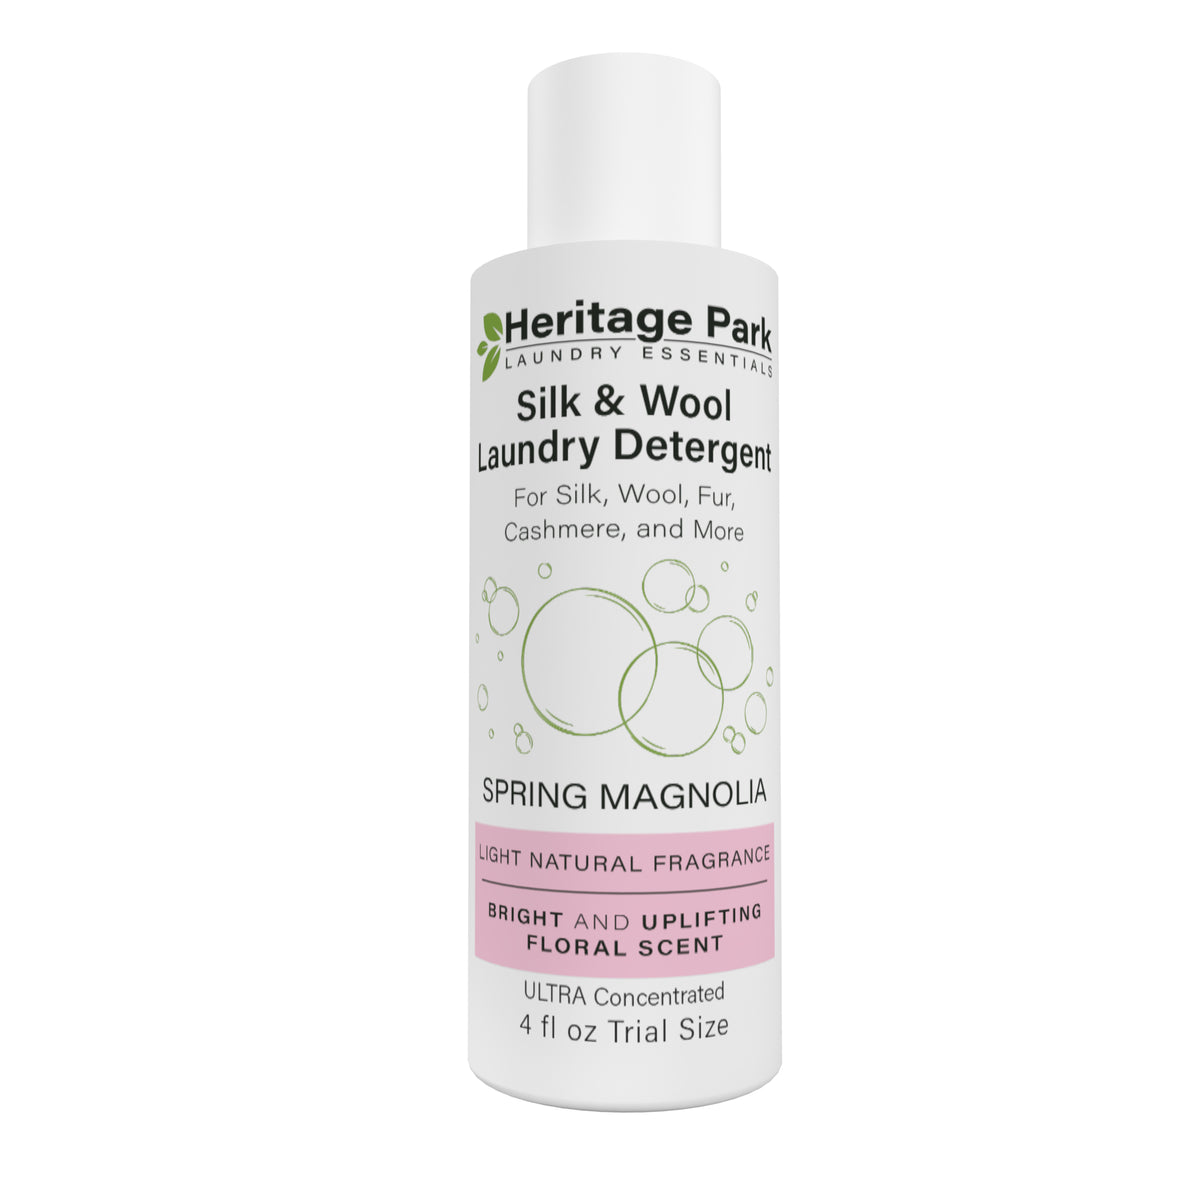 Spring Magnolia Silk & Wool Laundry Detergent - Light Floral Scent -  Heritage Park Laundry Essentials